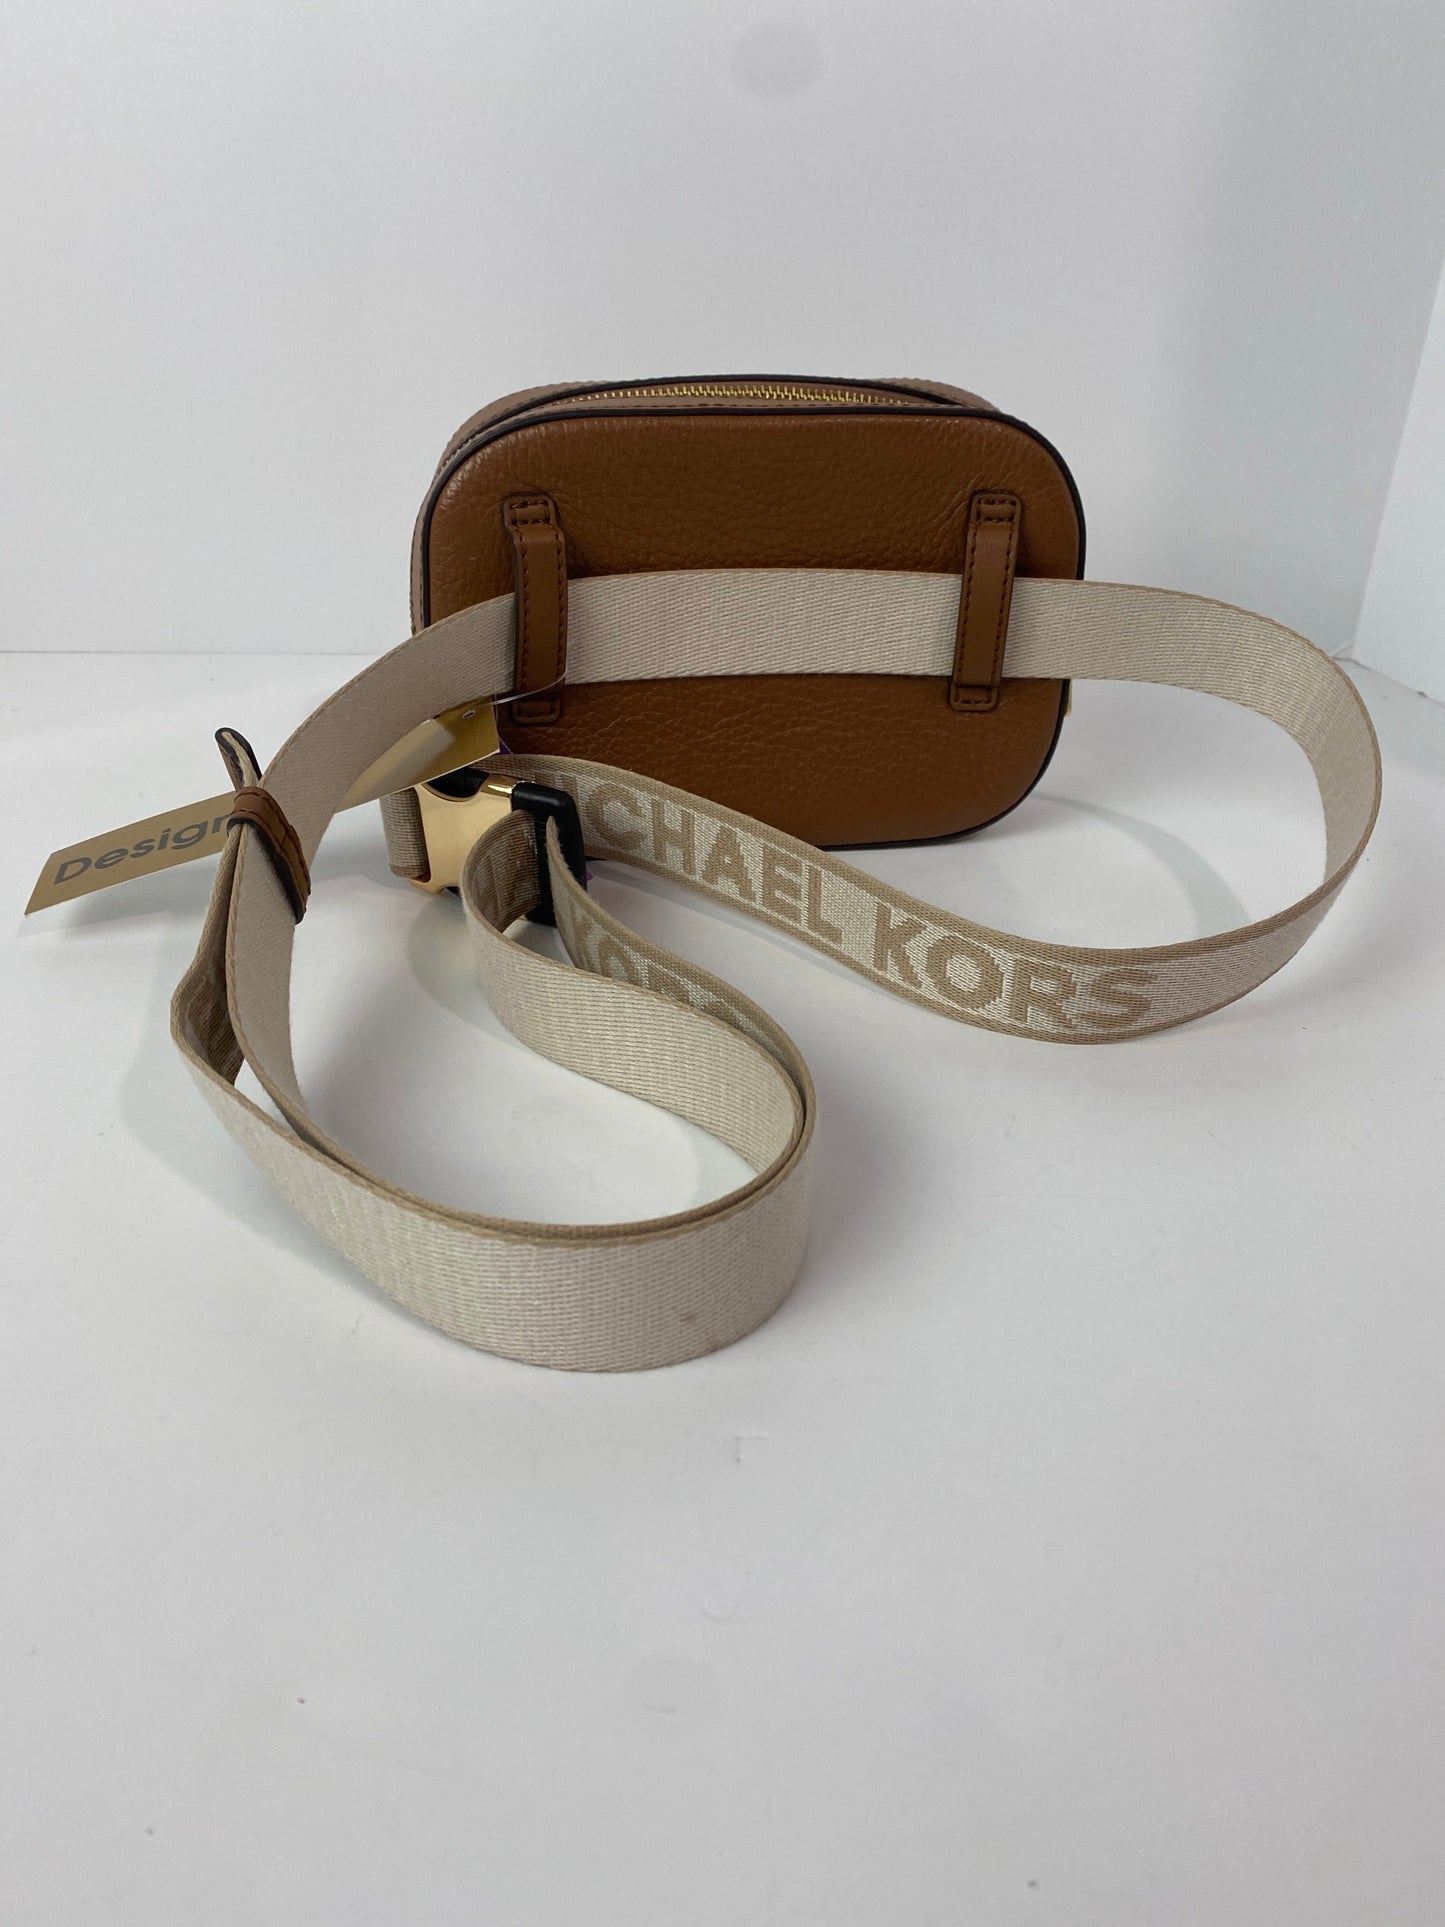 Belt Bag Designer Michael Kors, Size Small